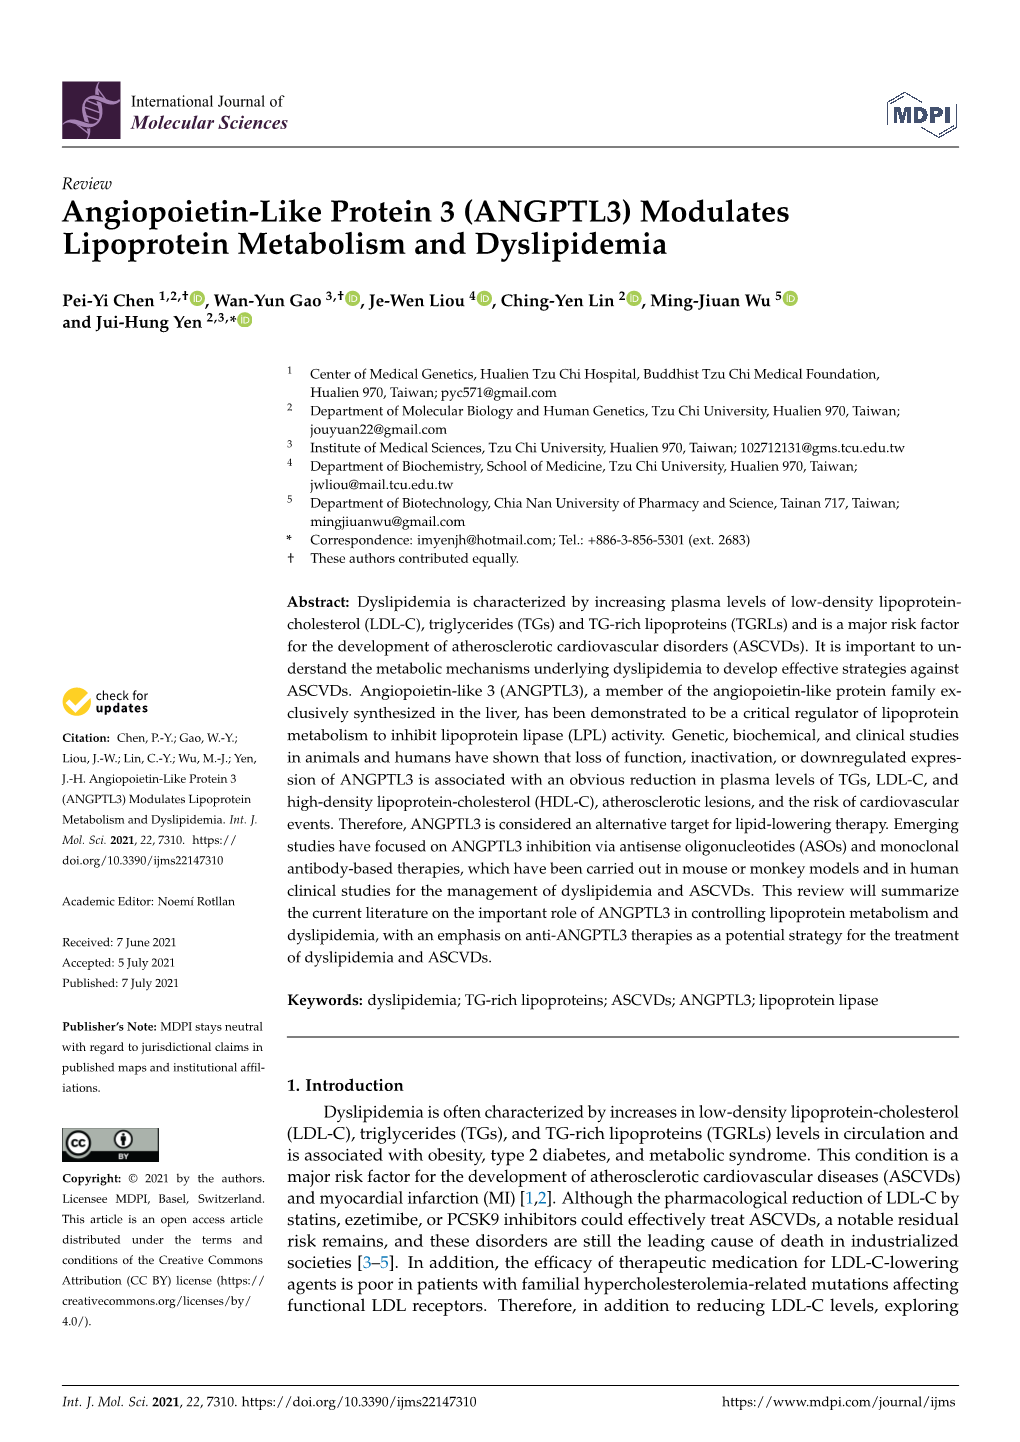 (ANGPTL3) Modulates Lipoprotein Metabolism and Dyslipidemia